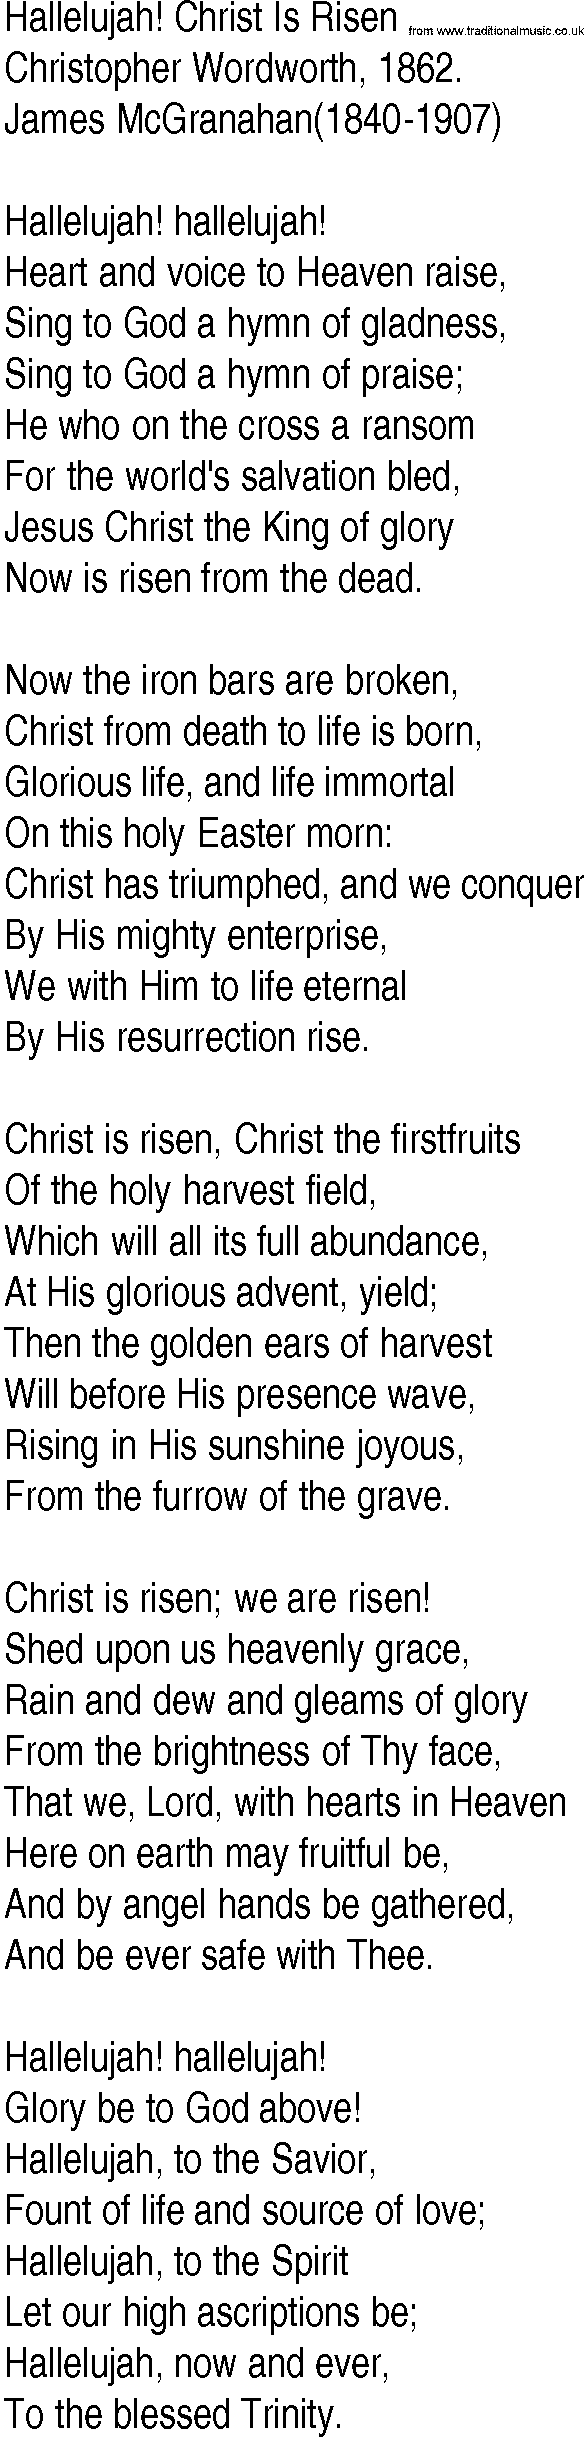 Hymn and Gospel Song: Hallelujah! Christ Is Risen by Christopher Wordworth lyrics